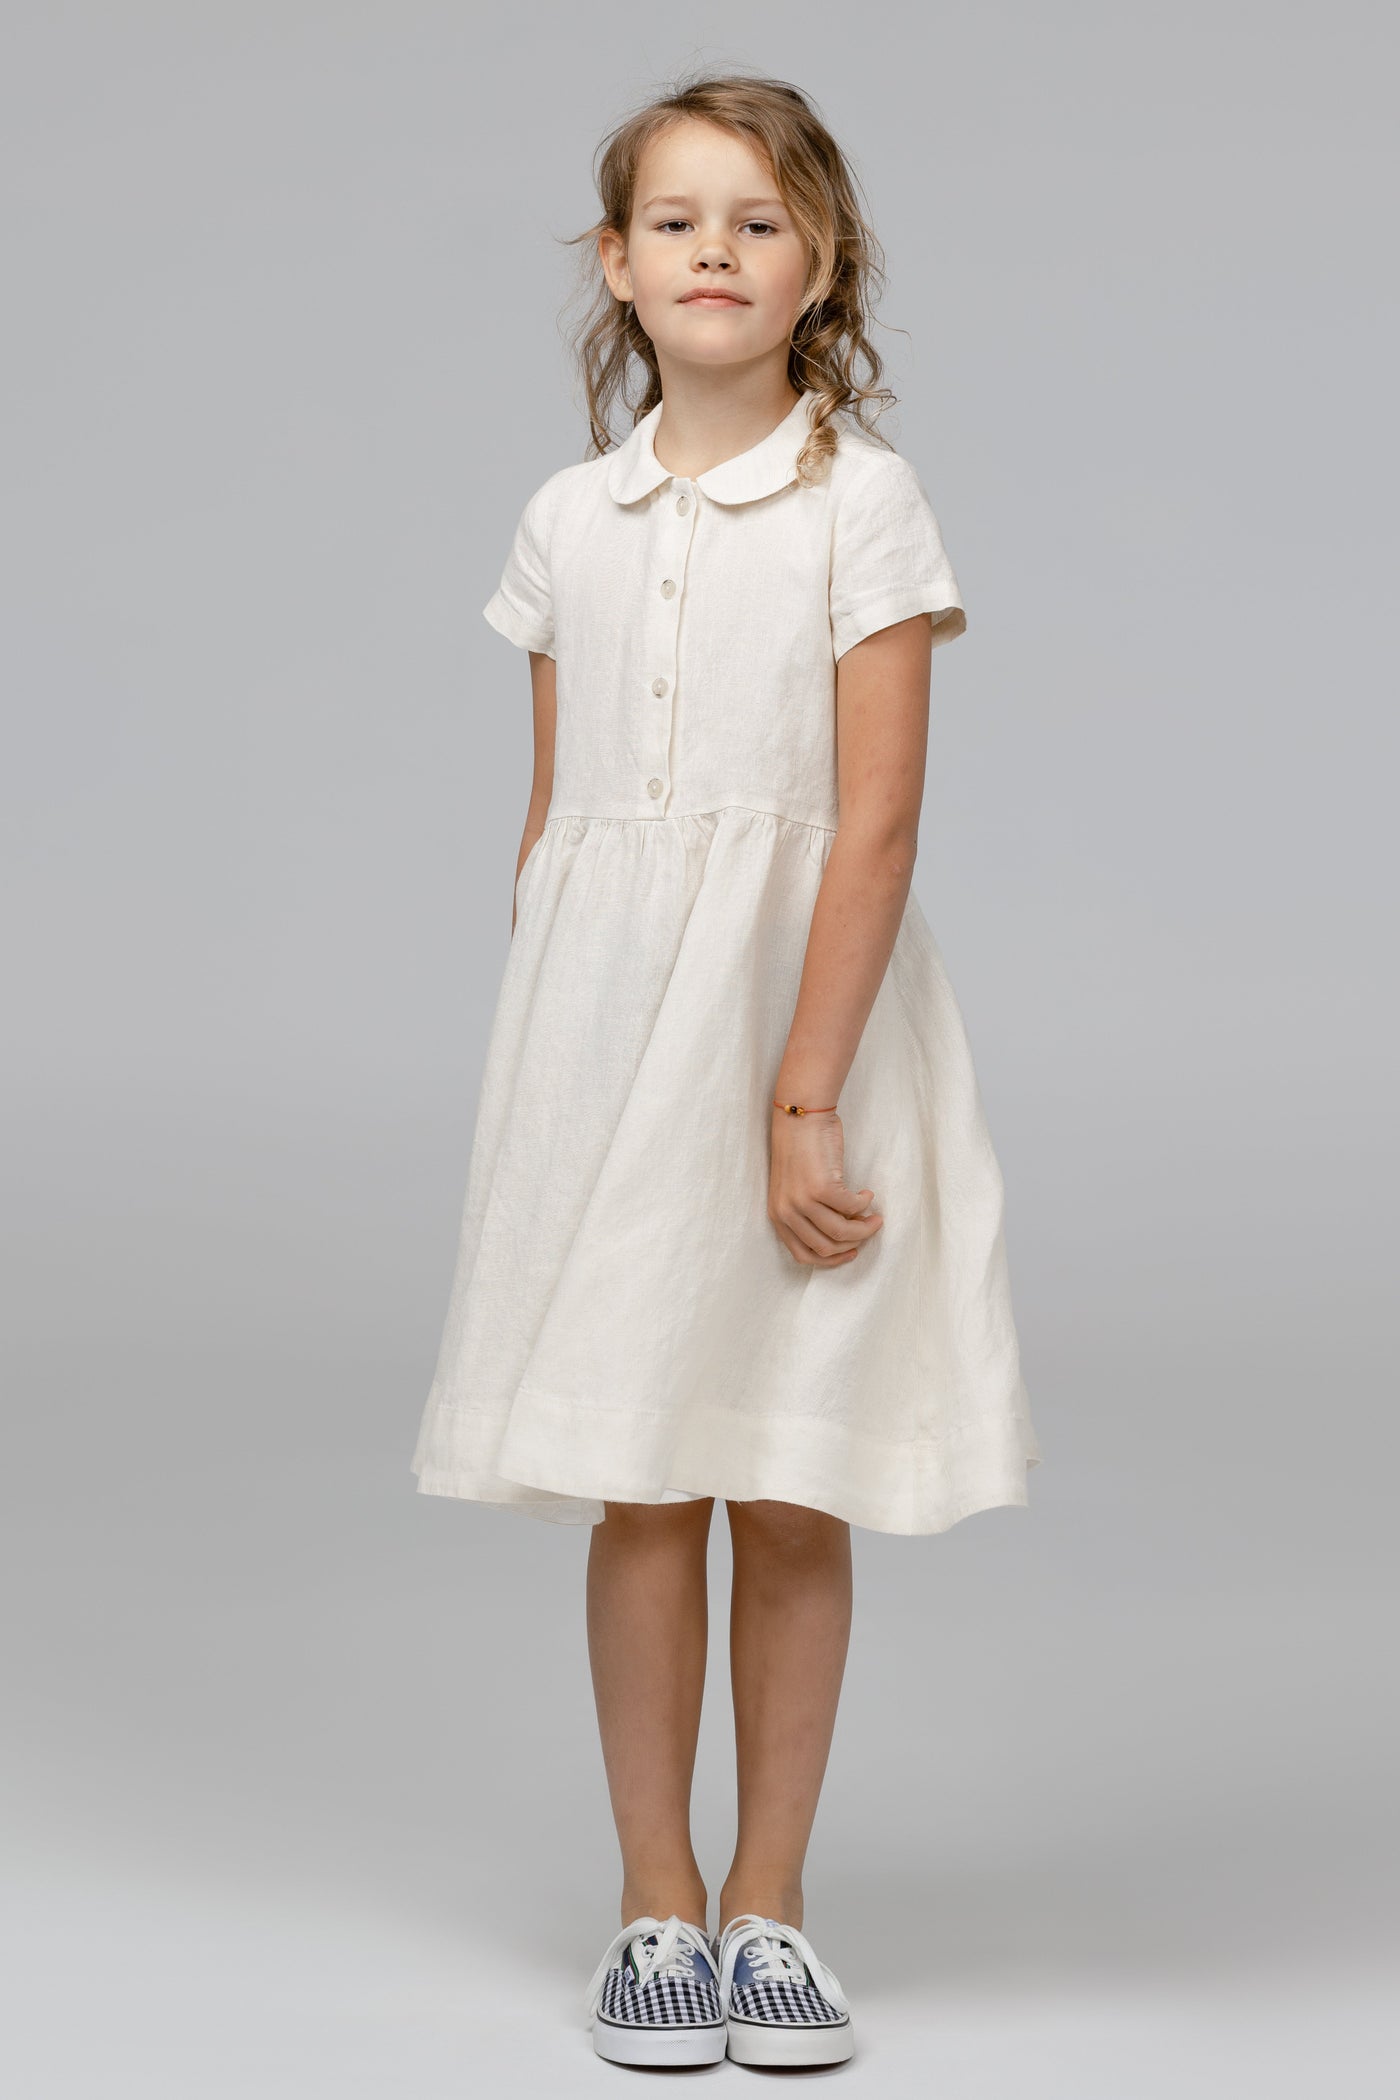 Mini Me Classic Dress, Short Sleeve, Milky White